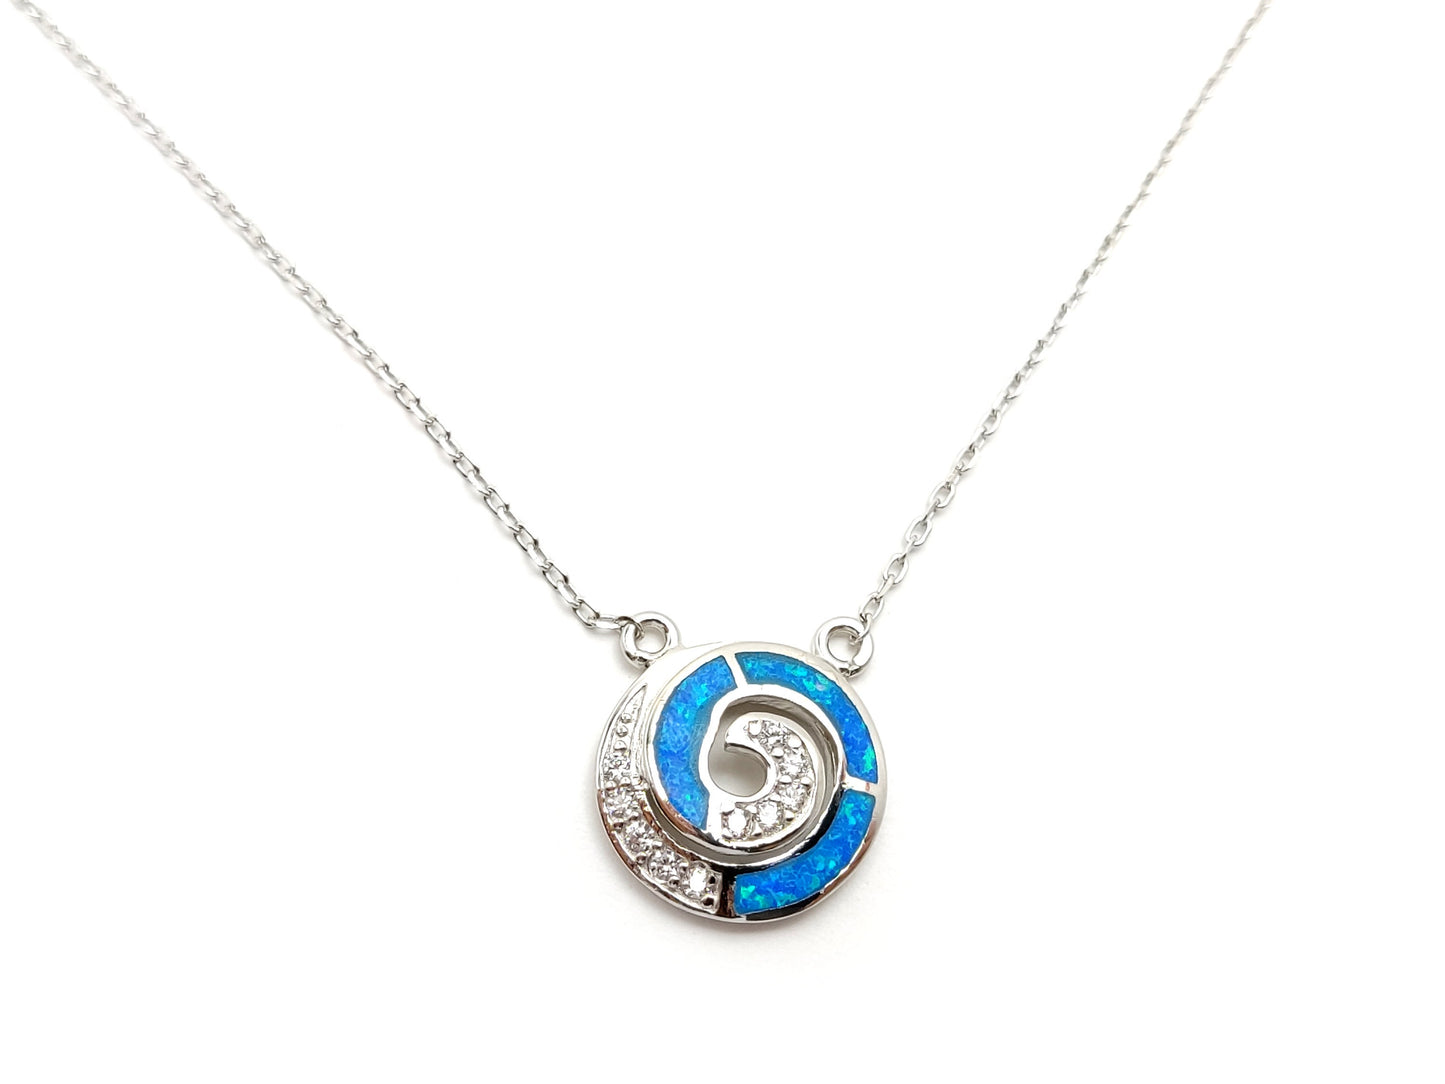 Greek Silver Necklace, Circle Of Life Infinity Spiral Design Ocean Blue Opal Chain Pendant, Jewelry From Greece, Griechischer Silber Schmuck